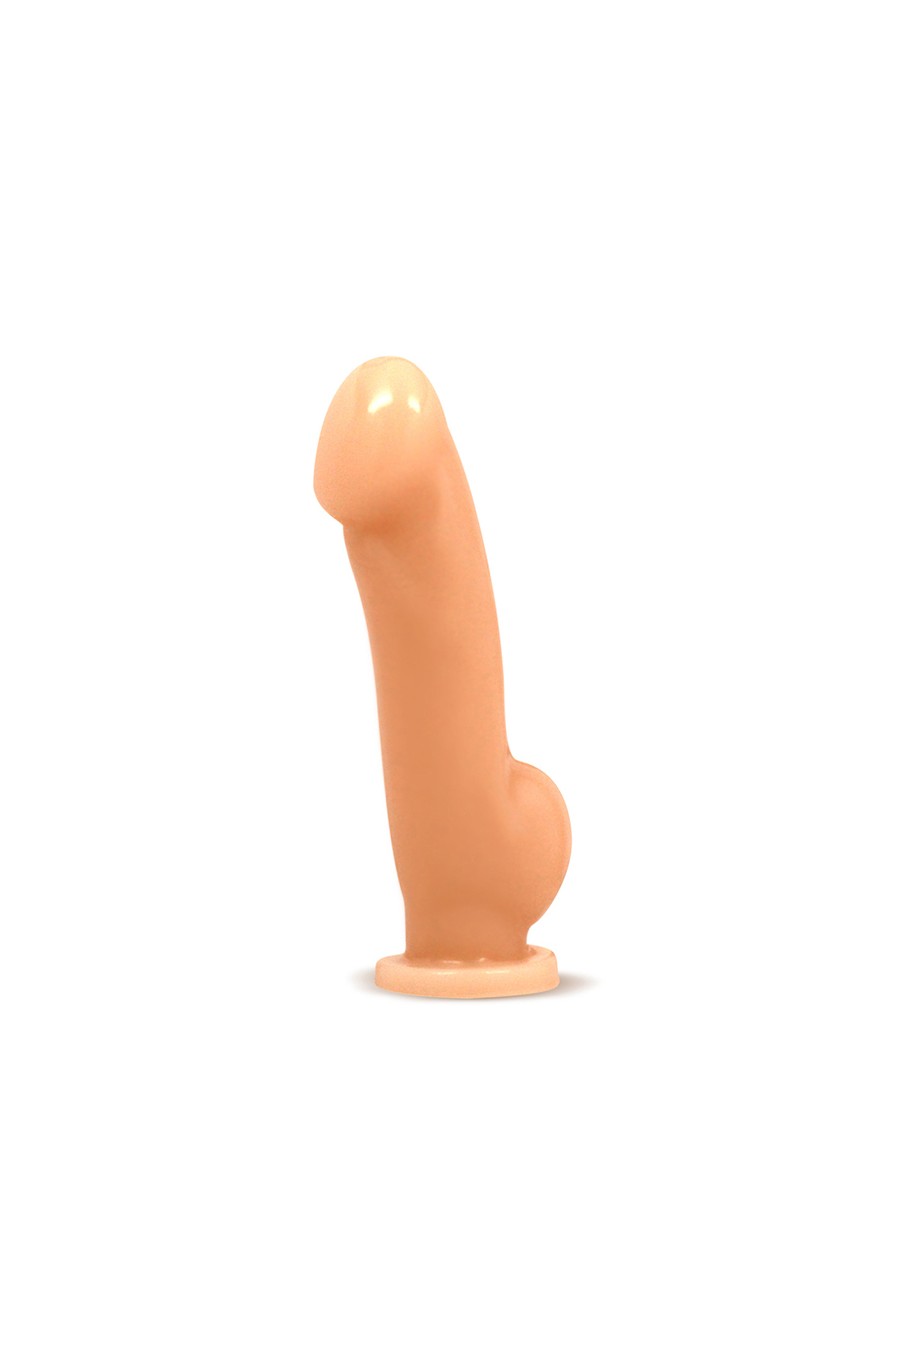 Dildo Dual Density Blush Real Nude Ergo Almond